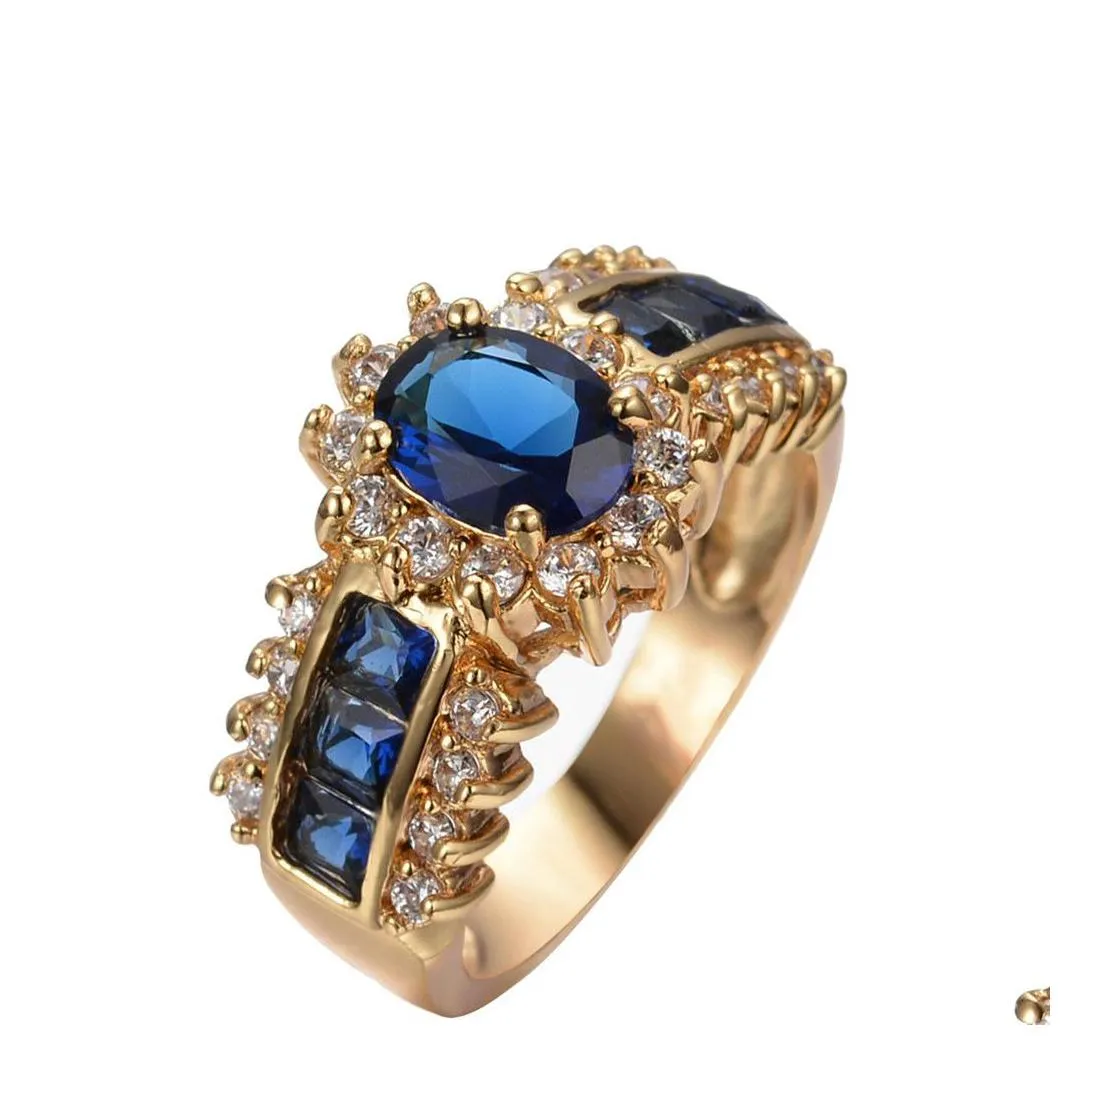 Solitaire Ring Gemstone Rings Size 6 7 8 9 10 11 12 Womens Blue Sapphire CZ 18K Gold Wedding Wedding بشكل جميل تسليم المجوهرات DHPDR